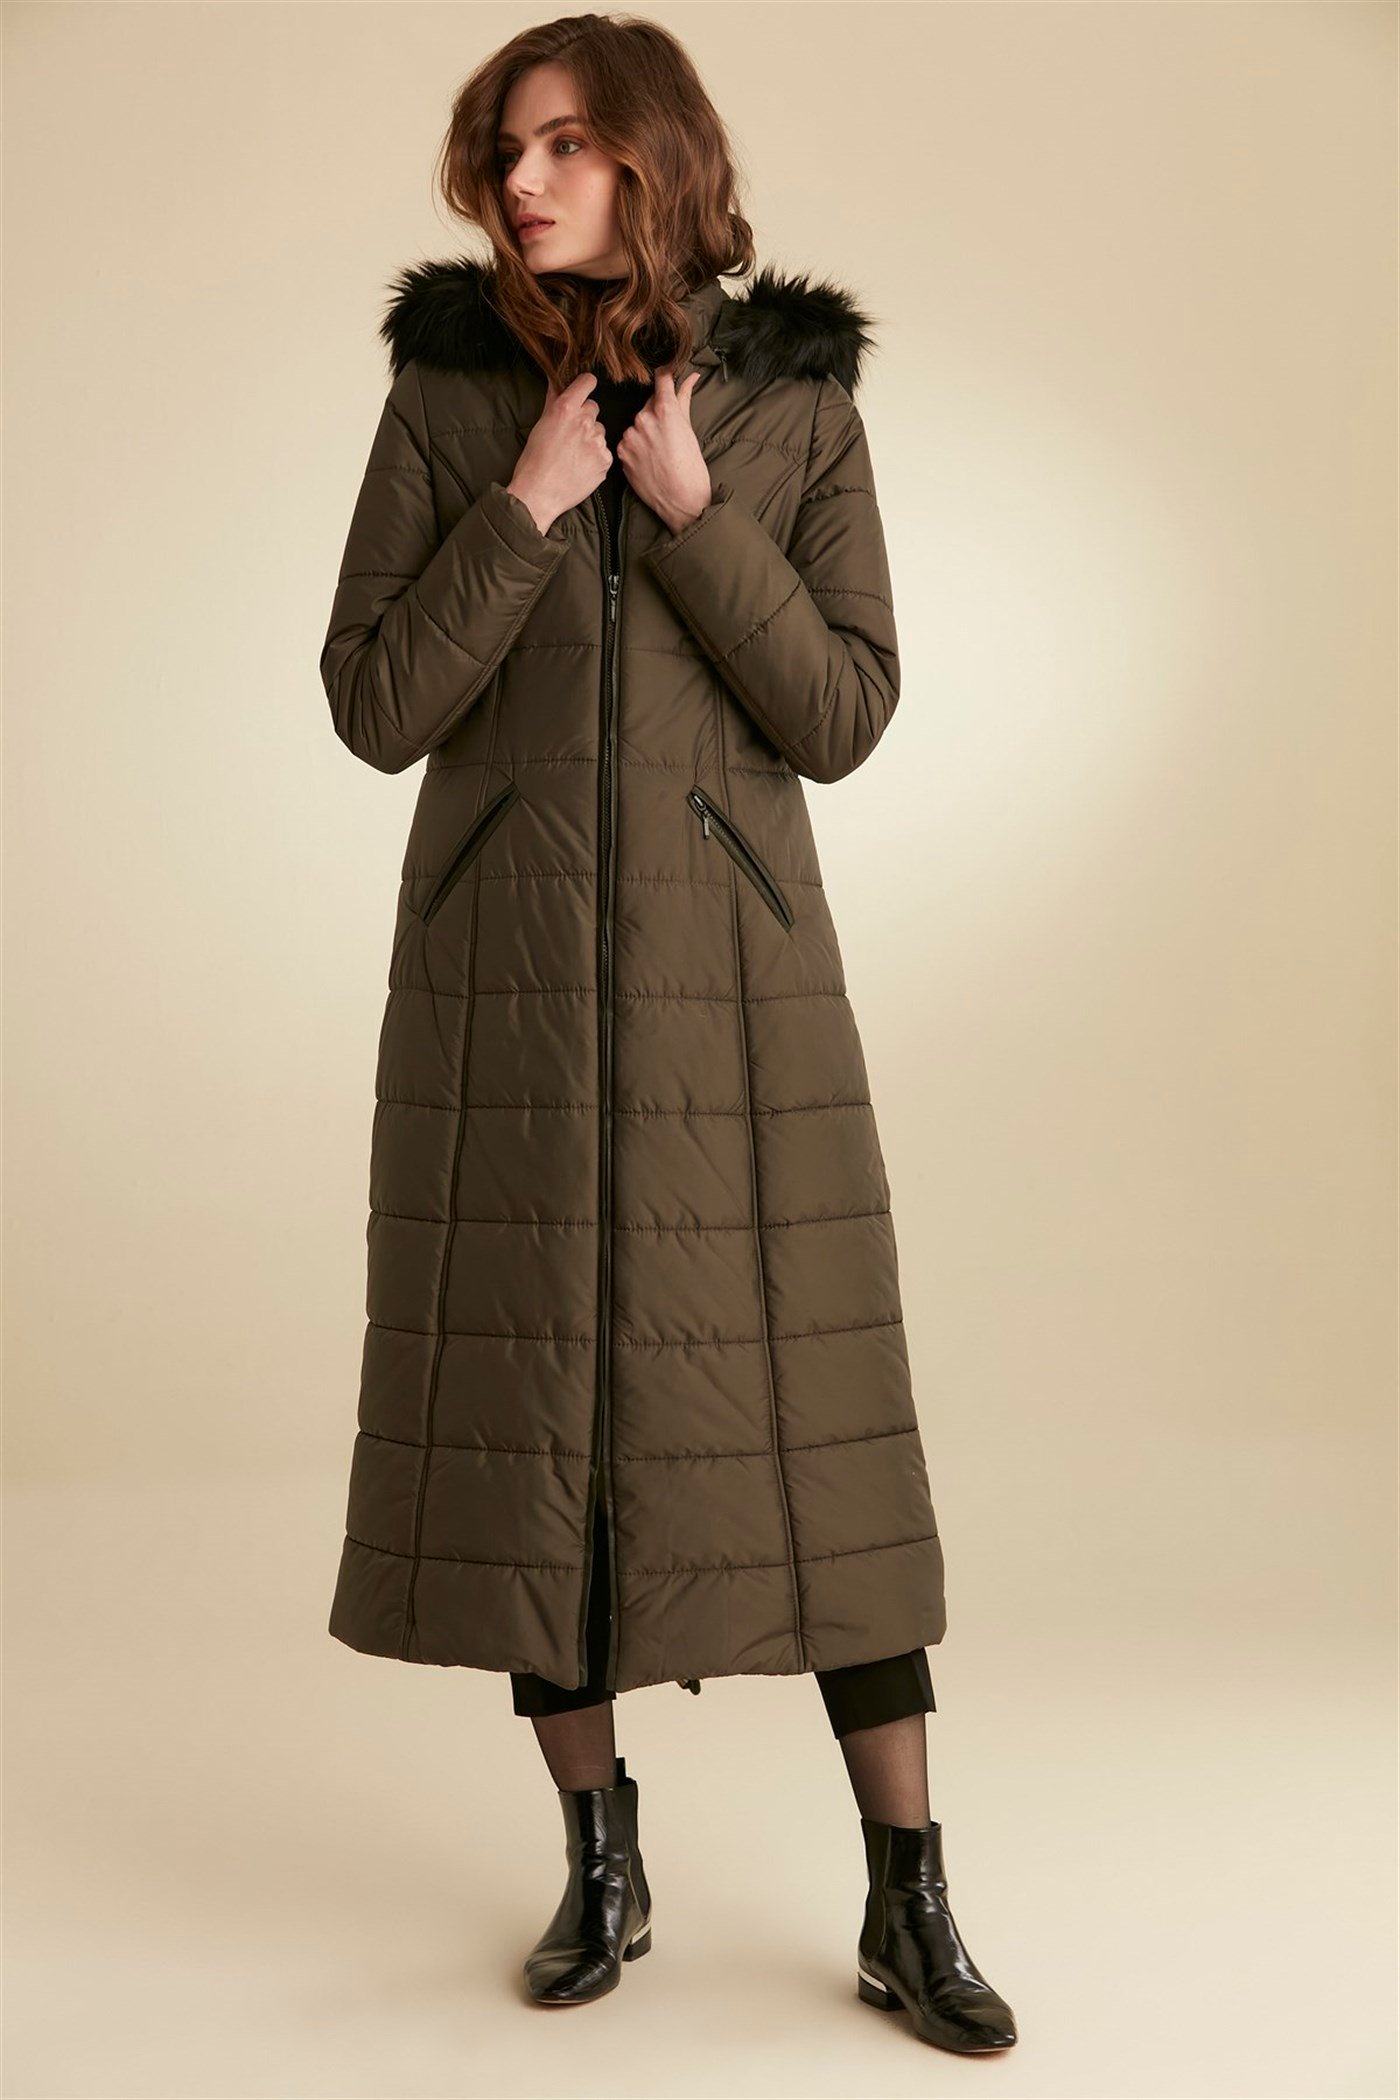 Fur Hooded Zippered Coat - Khaki